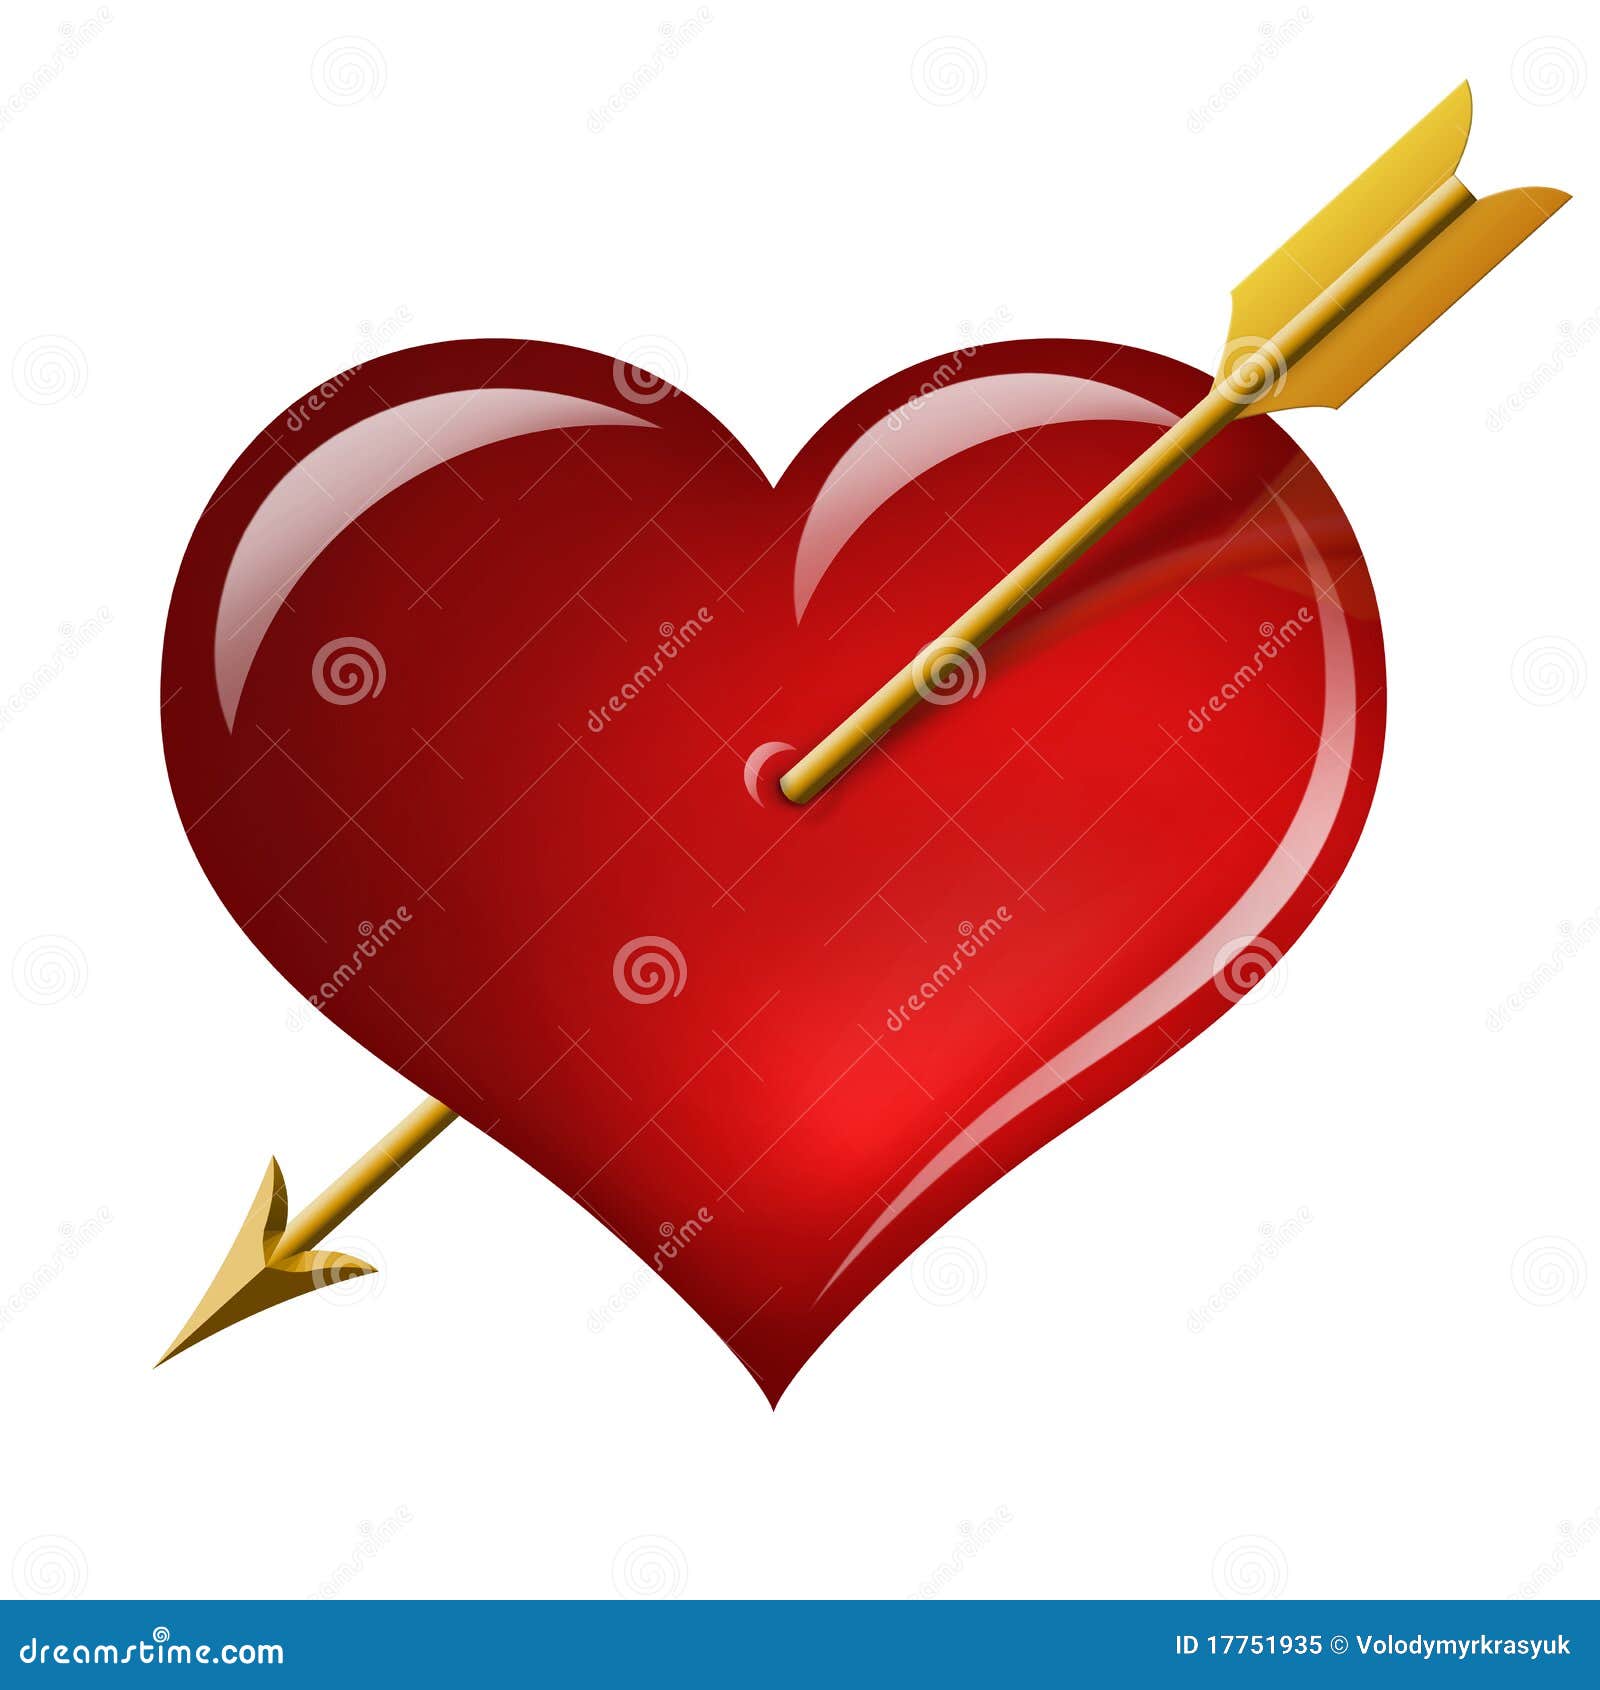 heart cupidon dating site dating în kerala kollam